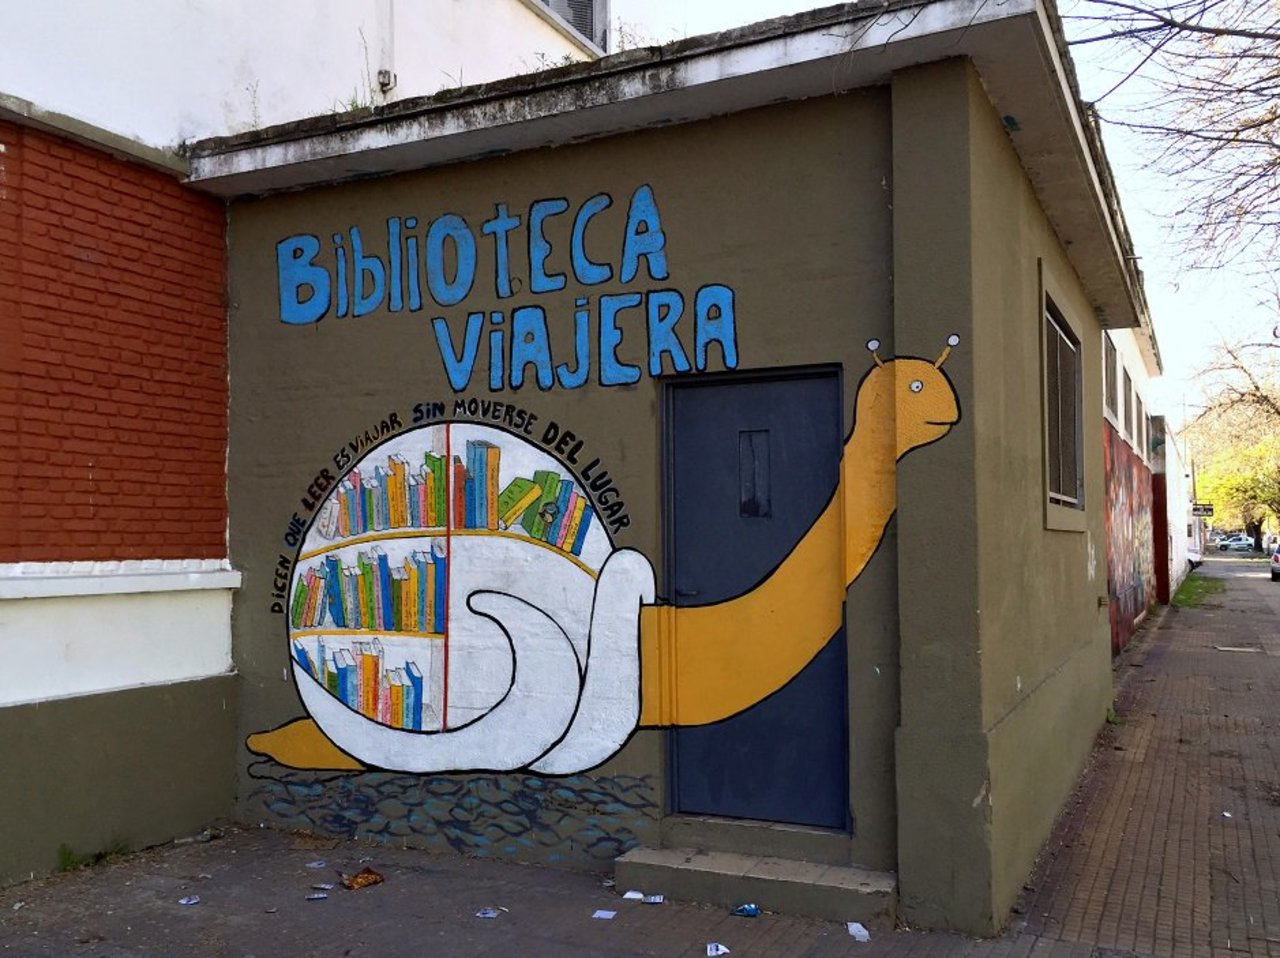 #Graffiti de hoy: <<El caracol de los libros >> calle 22,63y64 #LaPlata #Argentina #StreetArt #UrbanArt #ArteUrbano https://t.co/FksUsLgotp